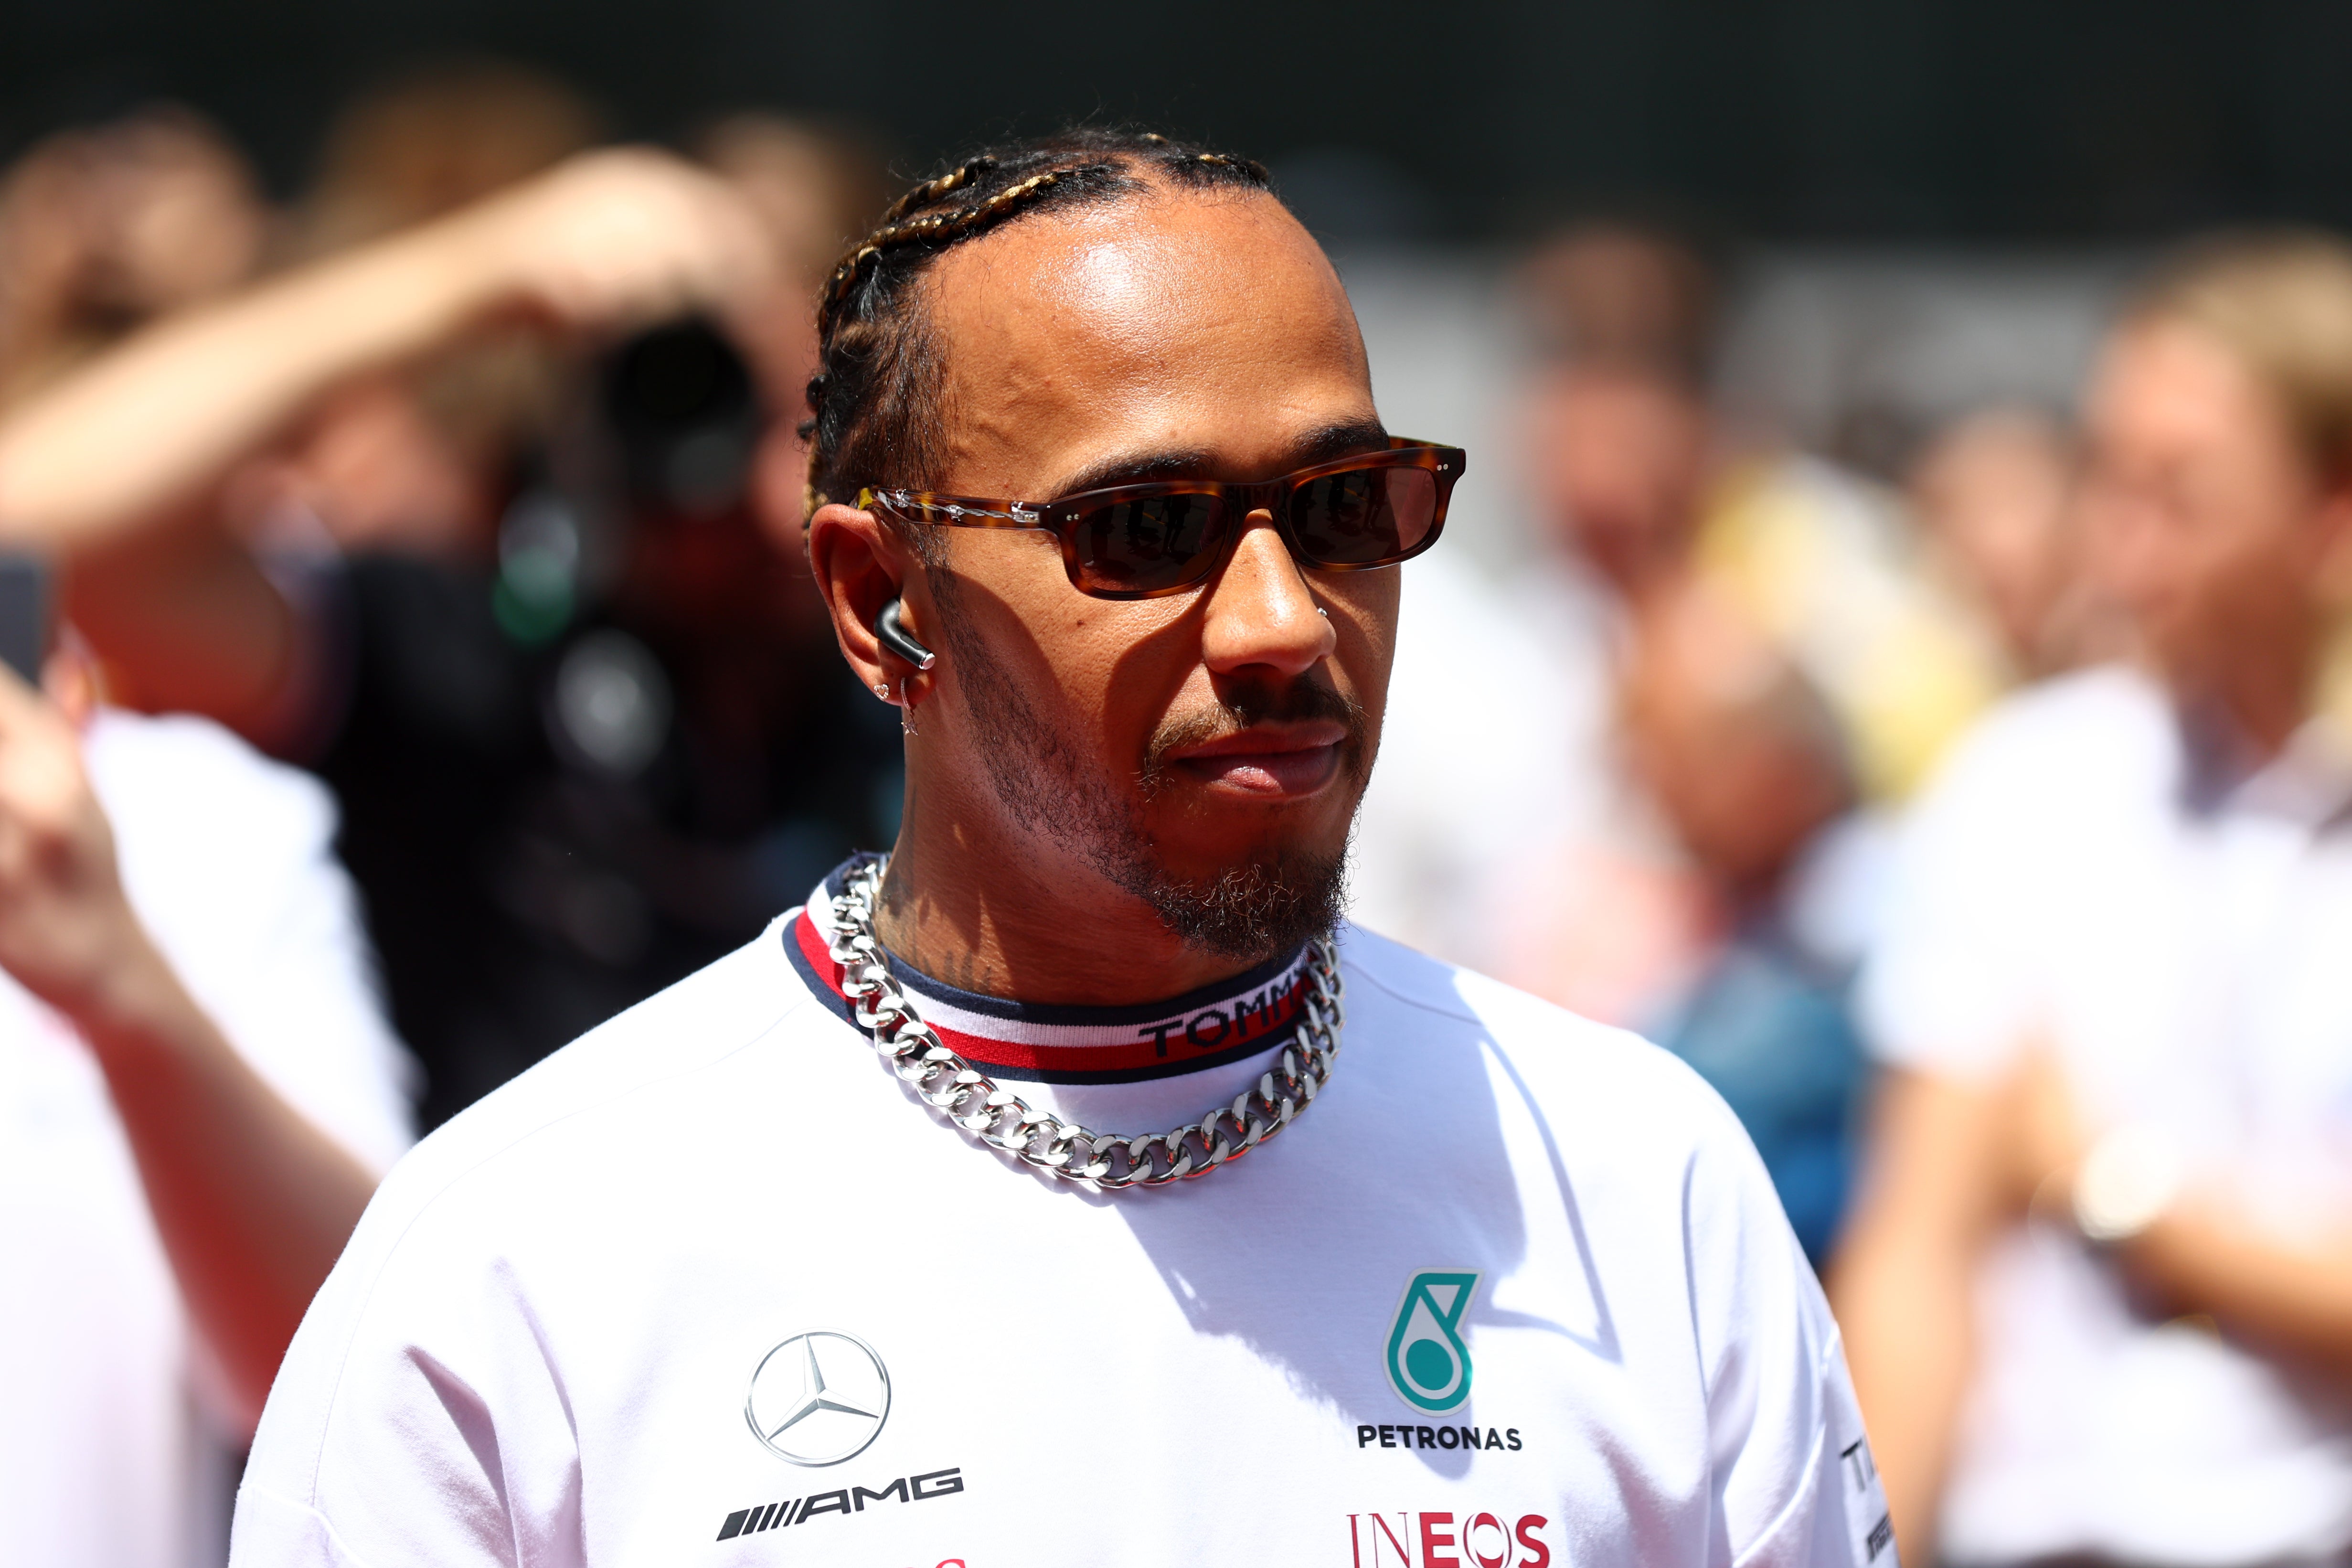 Lewis Hamilton has been tipped to carry on next season